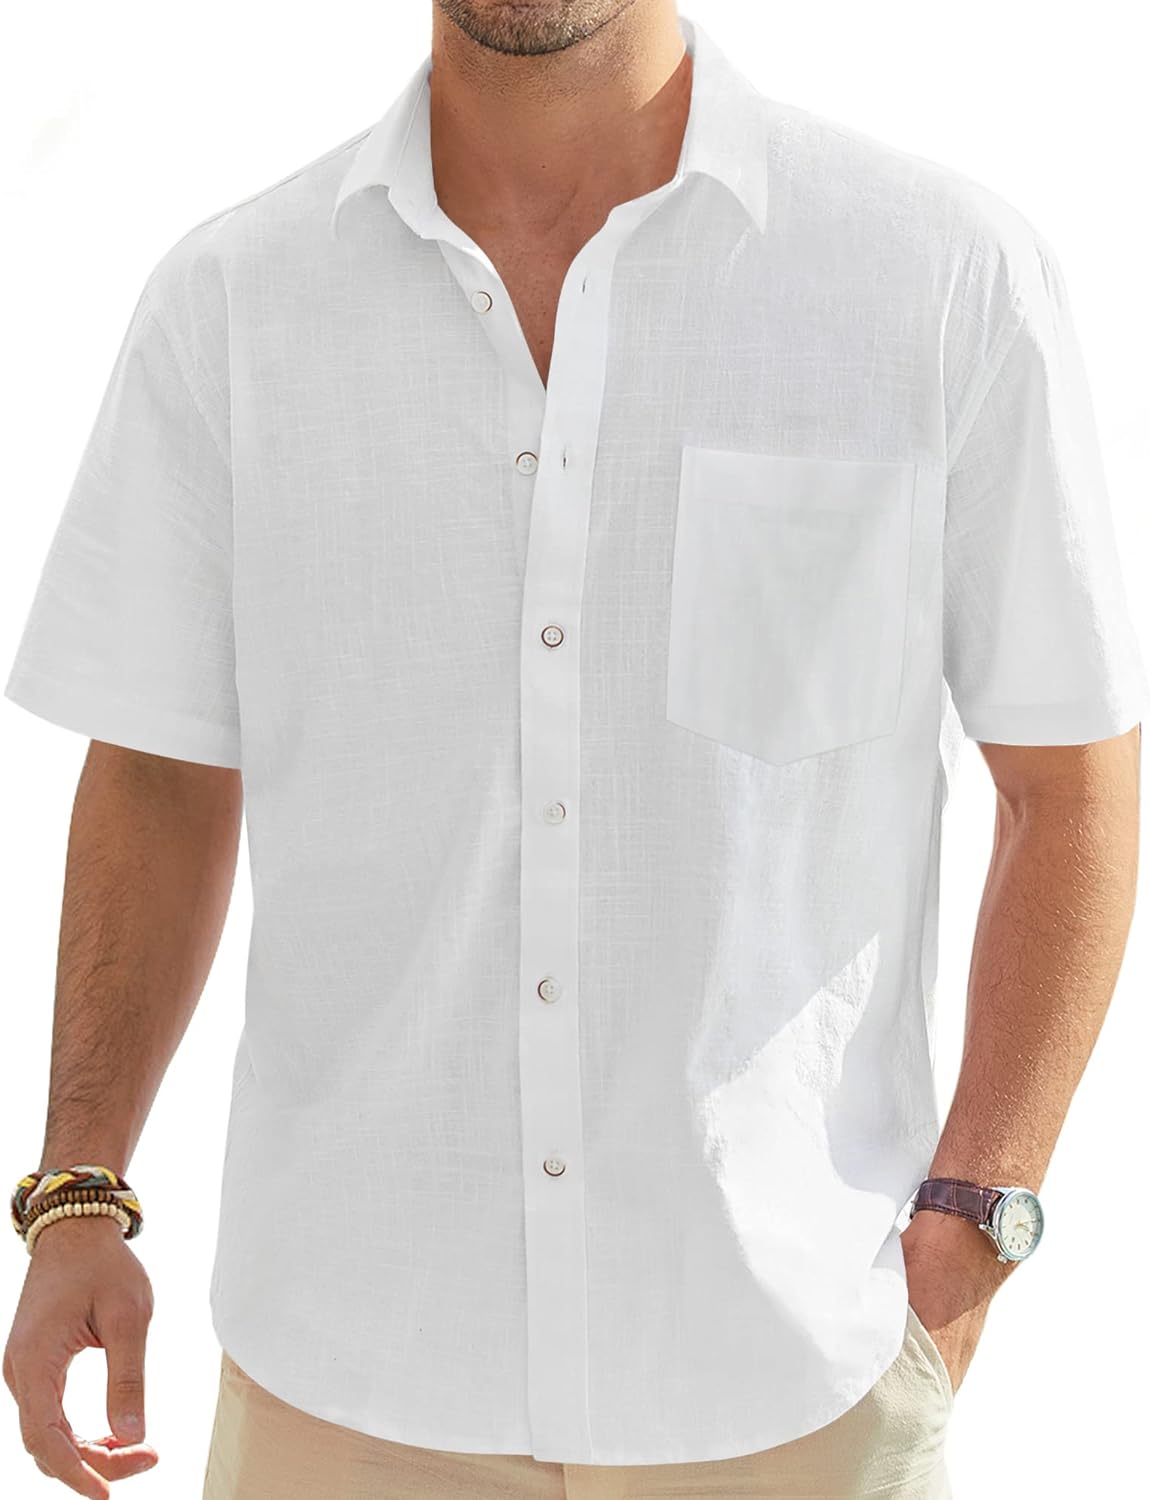 Mens Linen Button Down Shirts Long Sleeves Summer Beach Casual